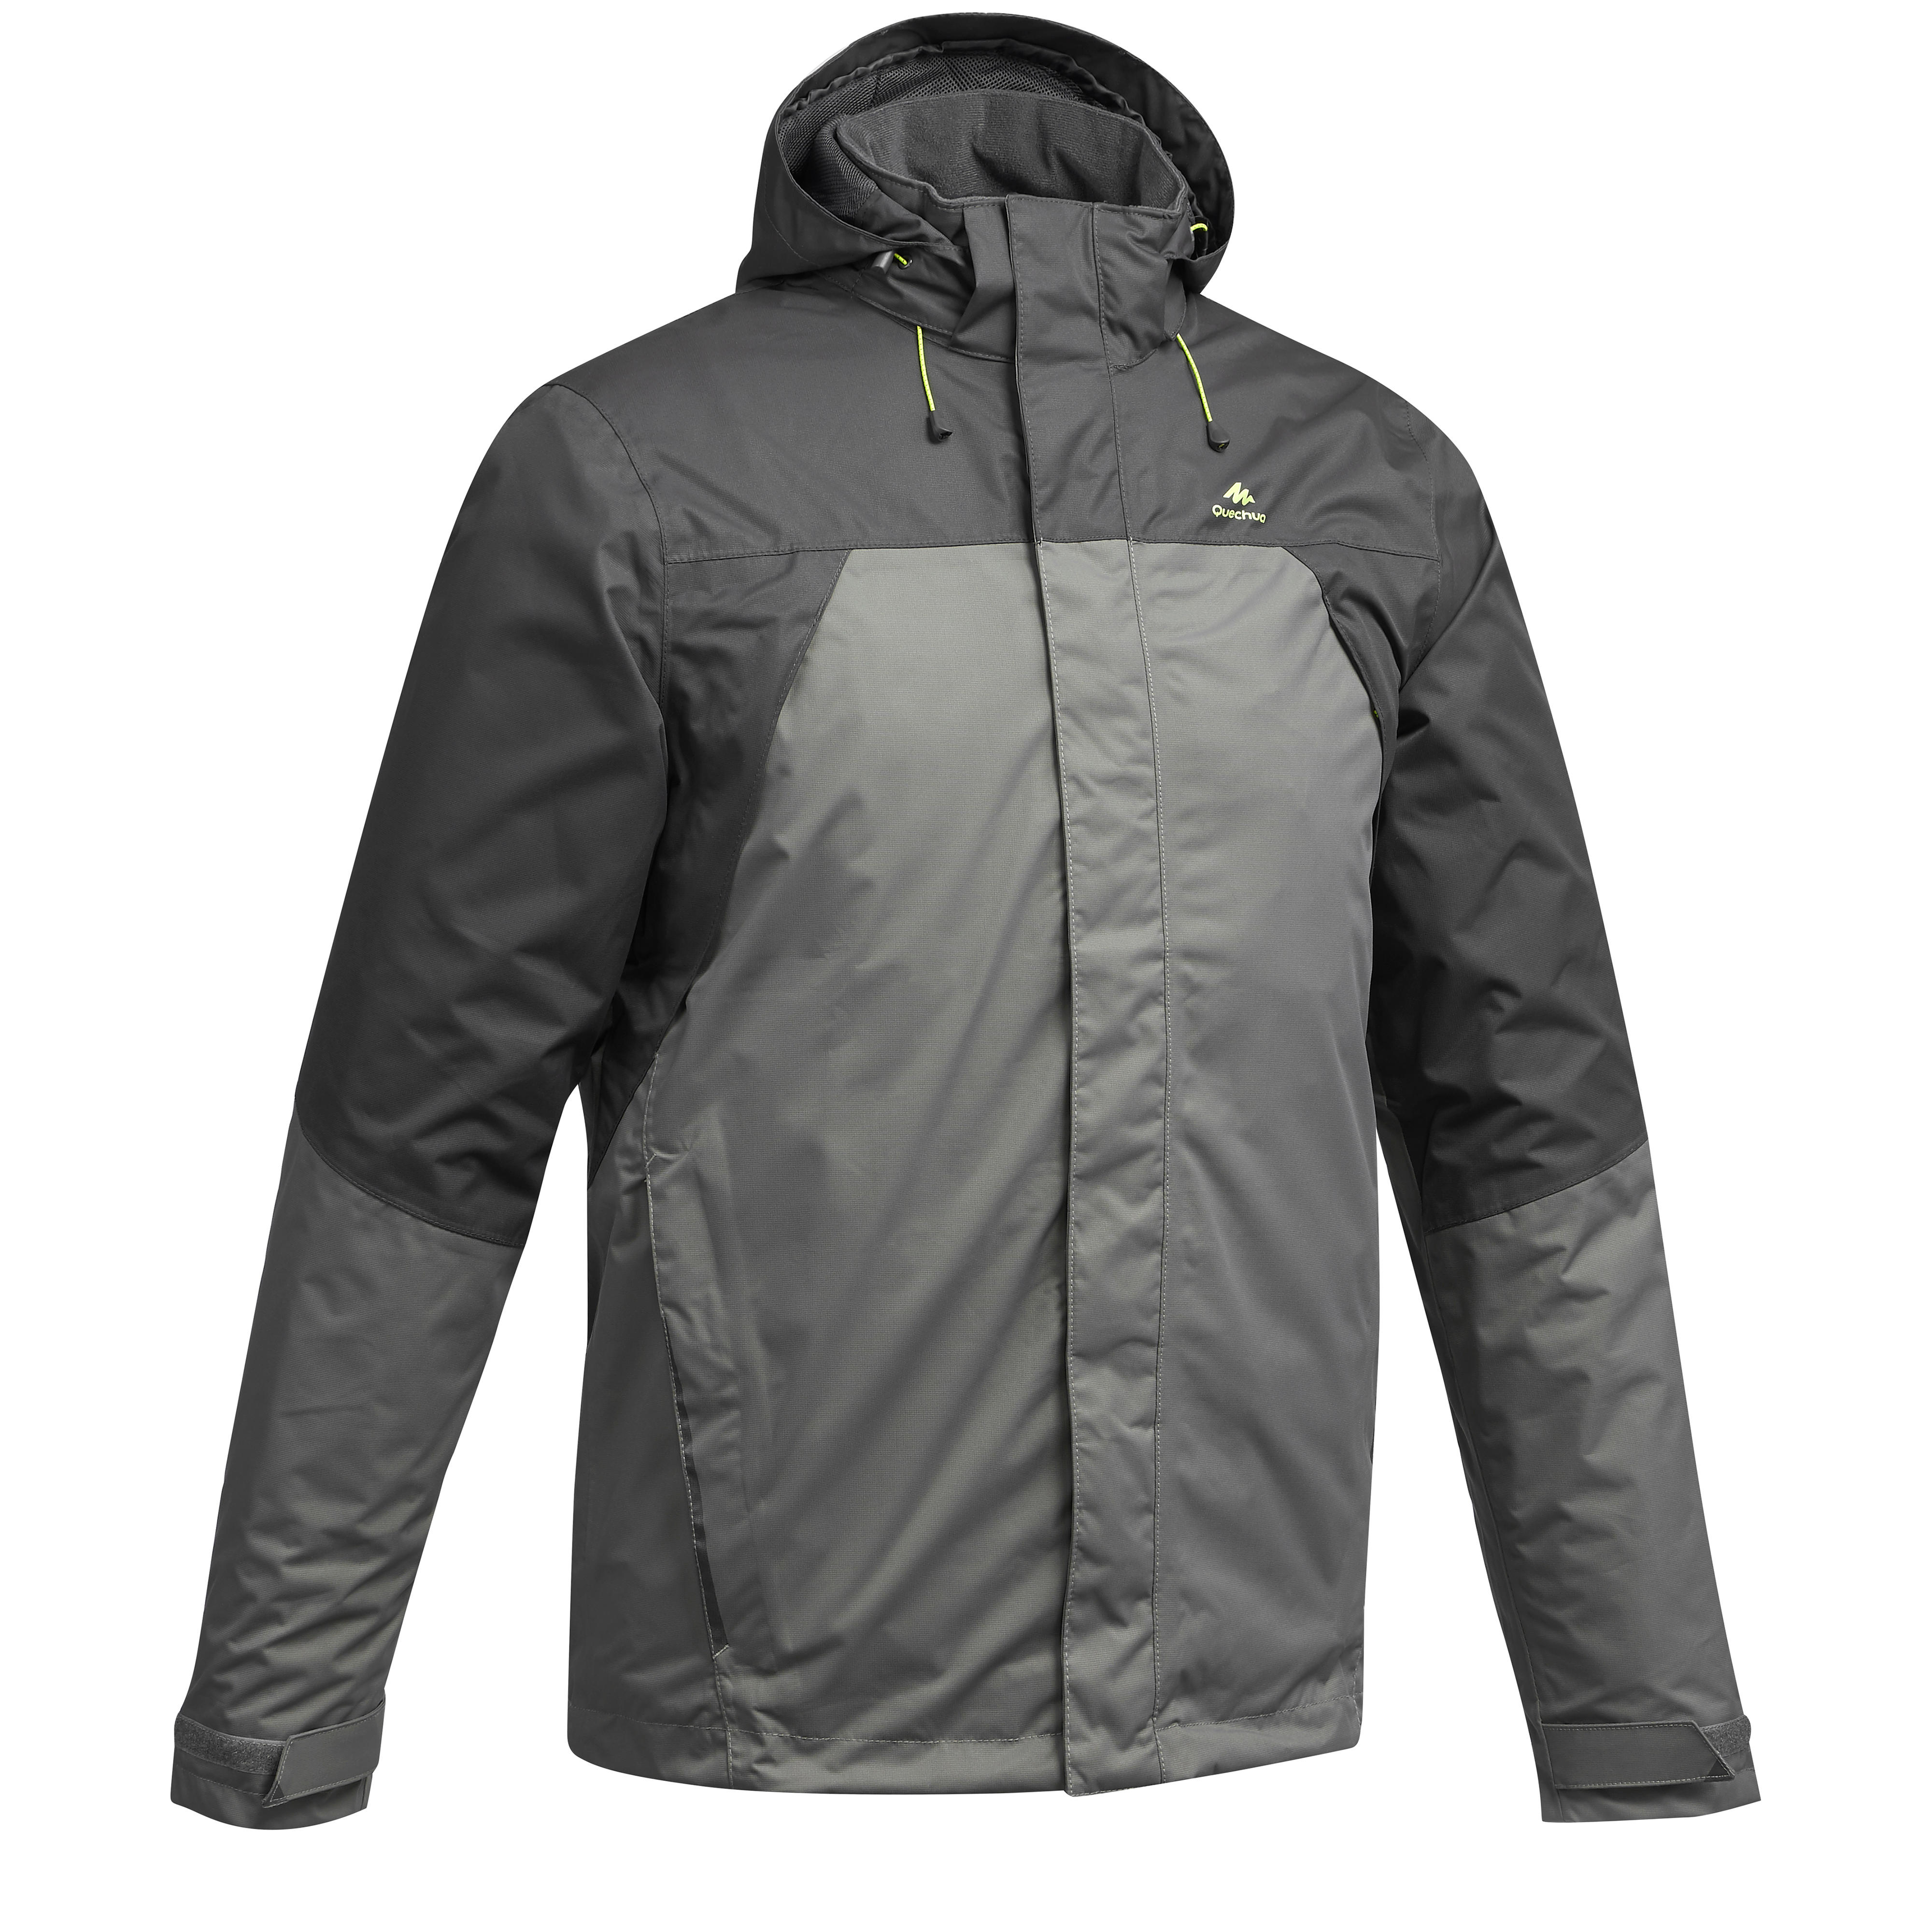 Buy Raincoat for Men|Mountain Hiking Waterproof Rain Jacket|Decathlon